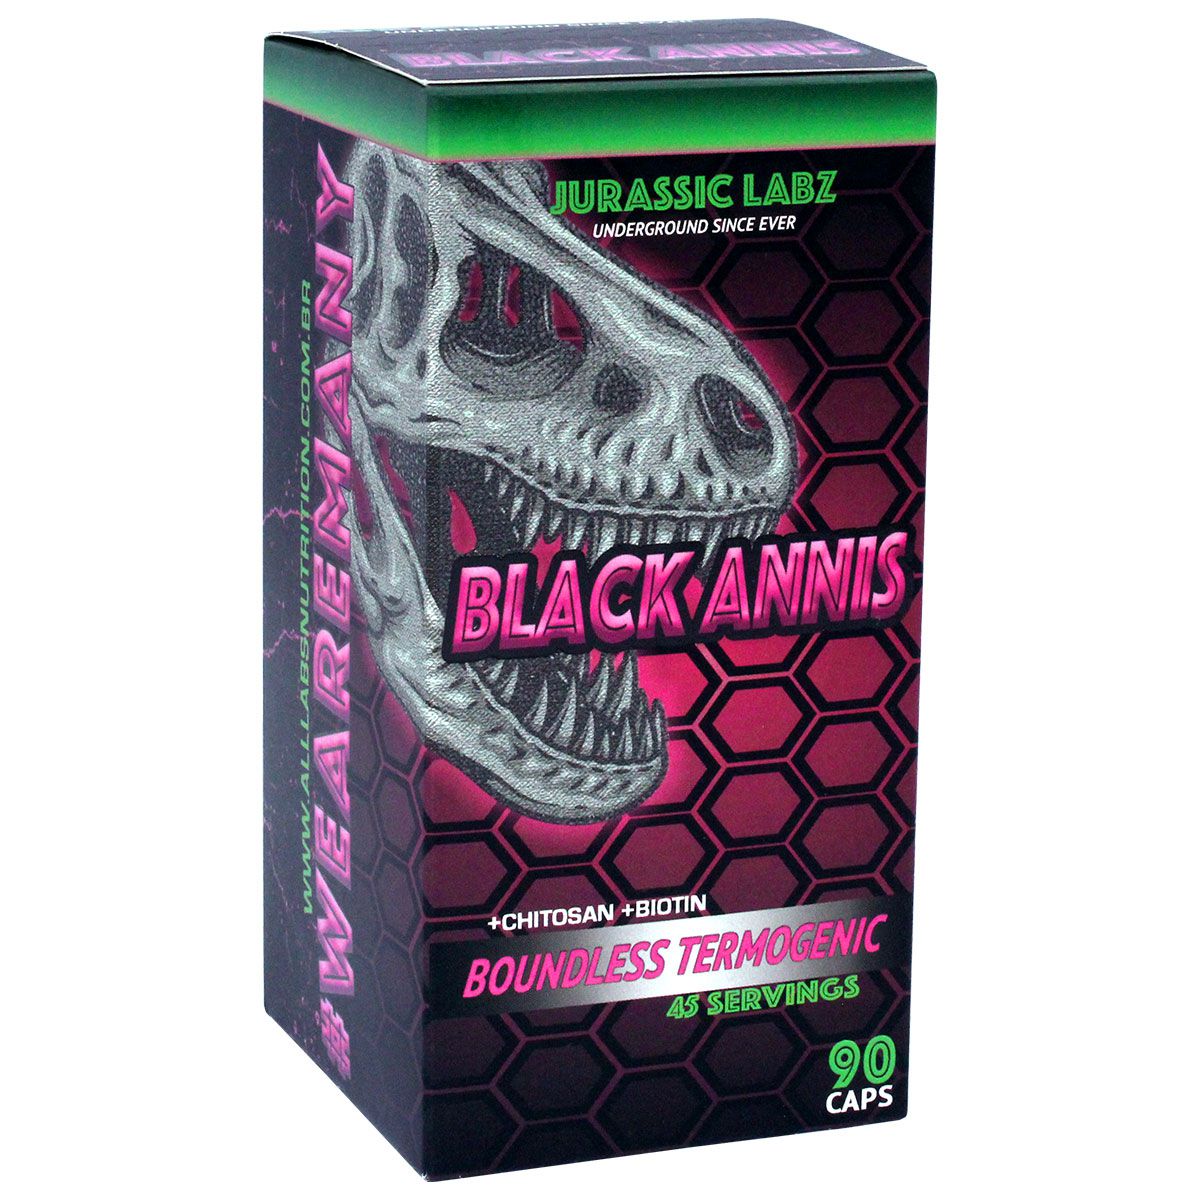 Black Annis (90 Caps Termogênico) Jurassic Labz - AllLabs.Oficial